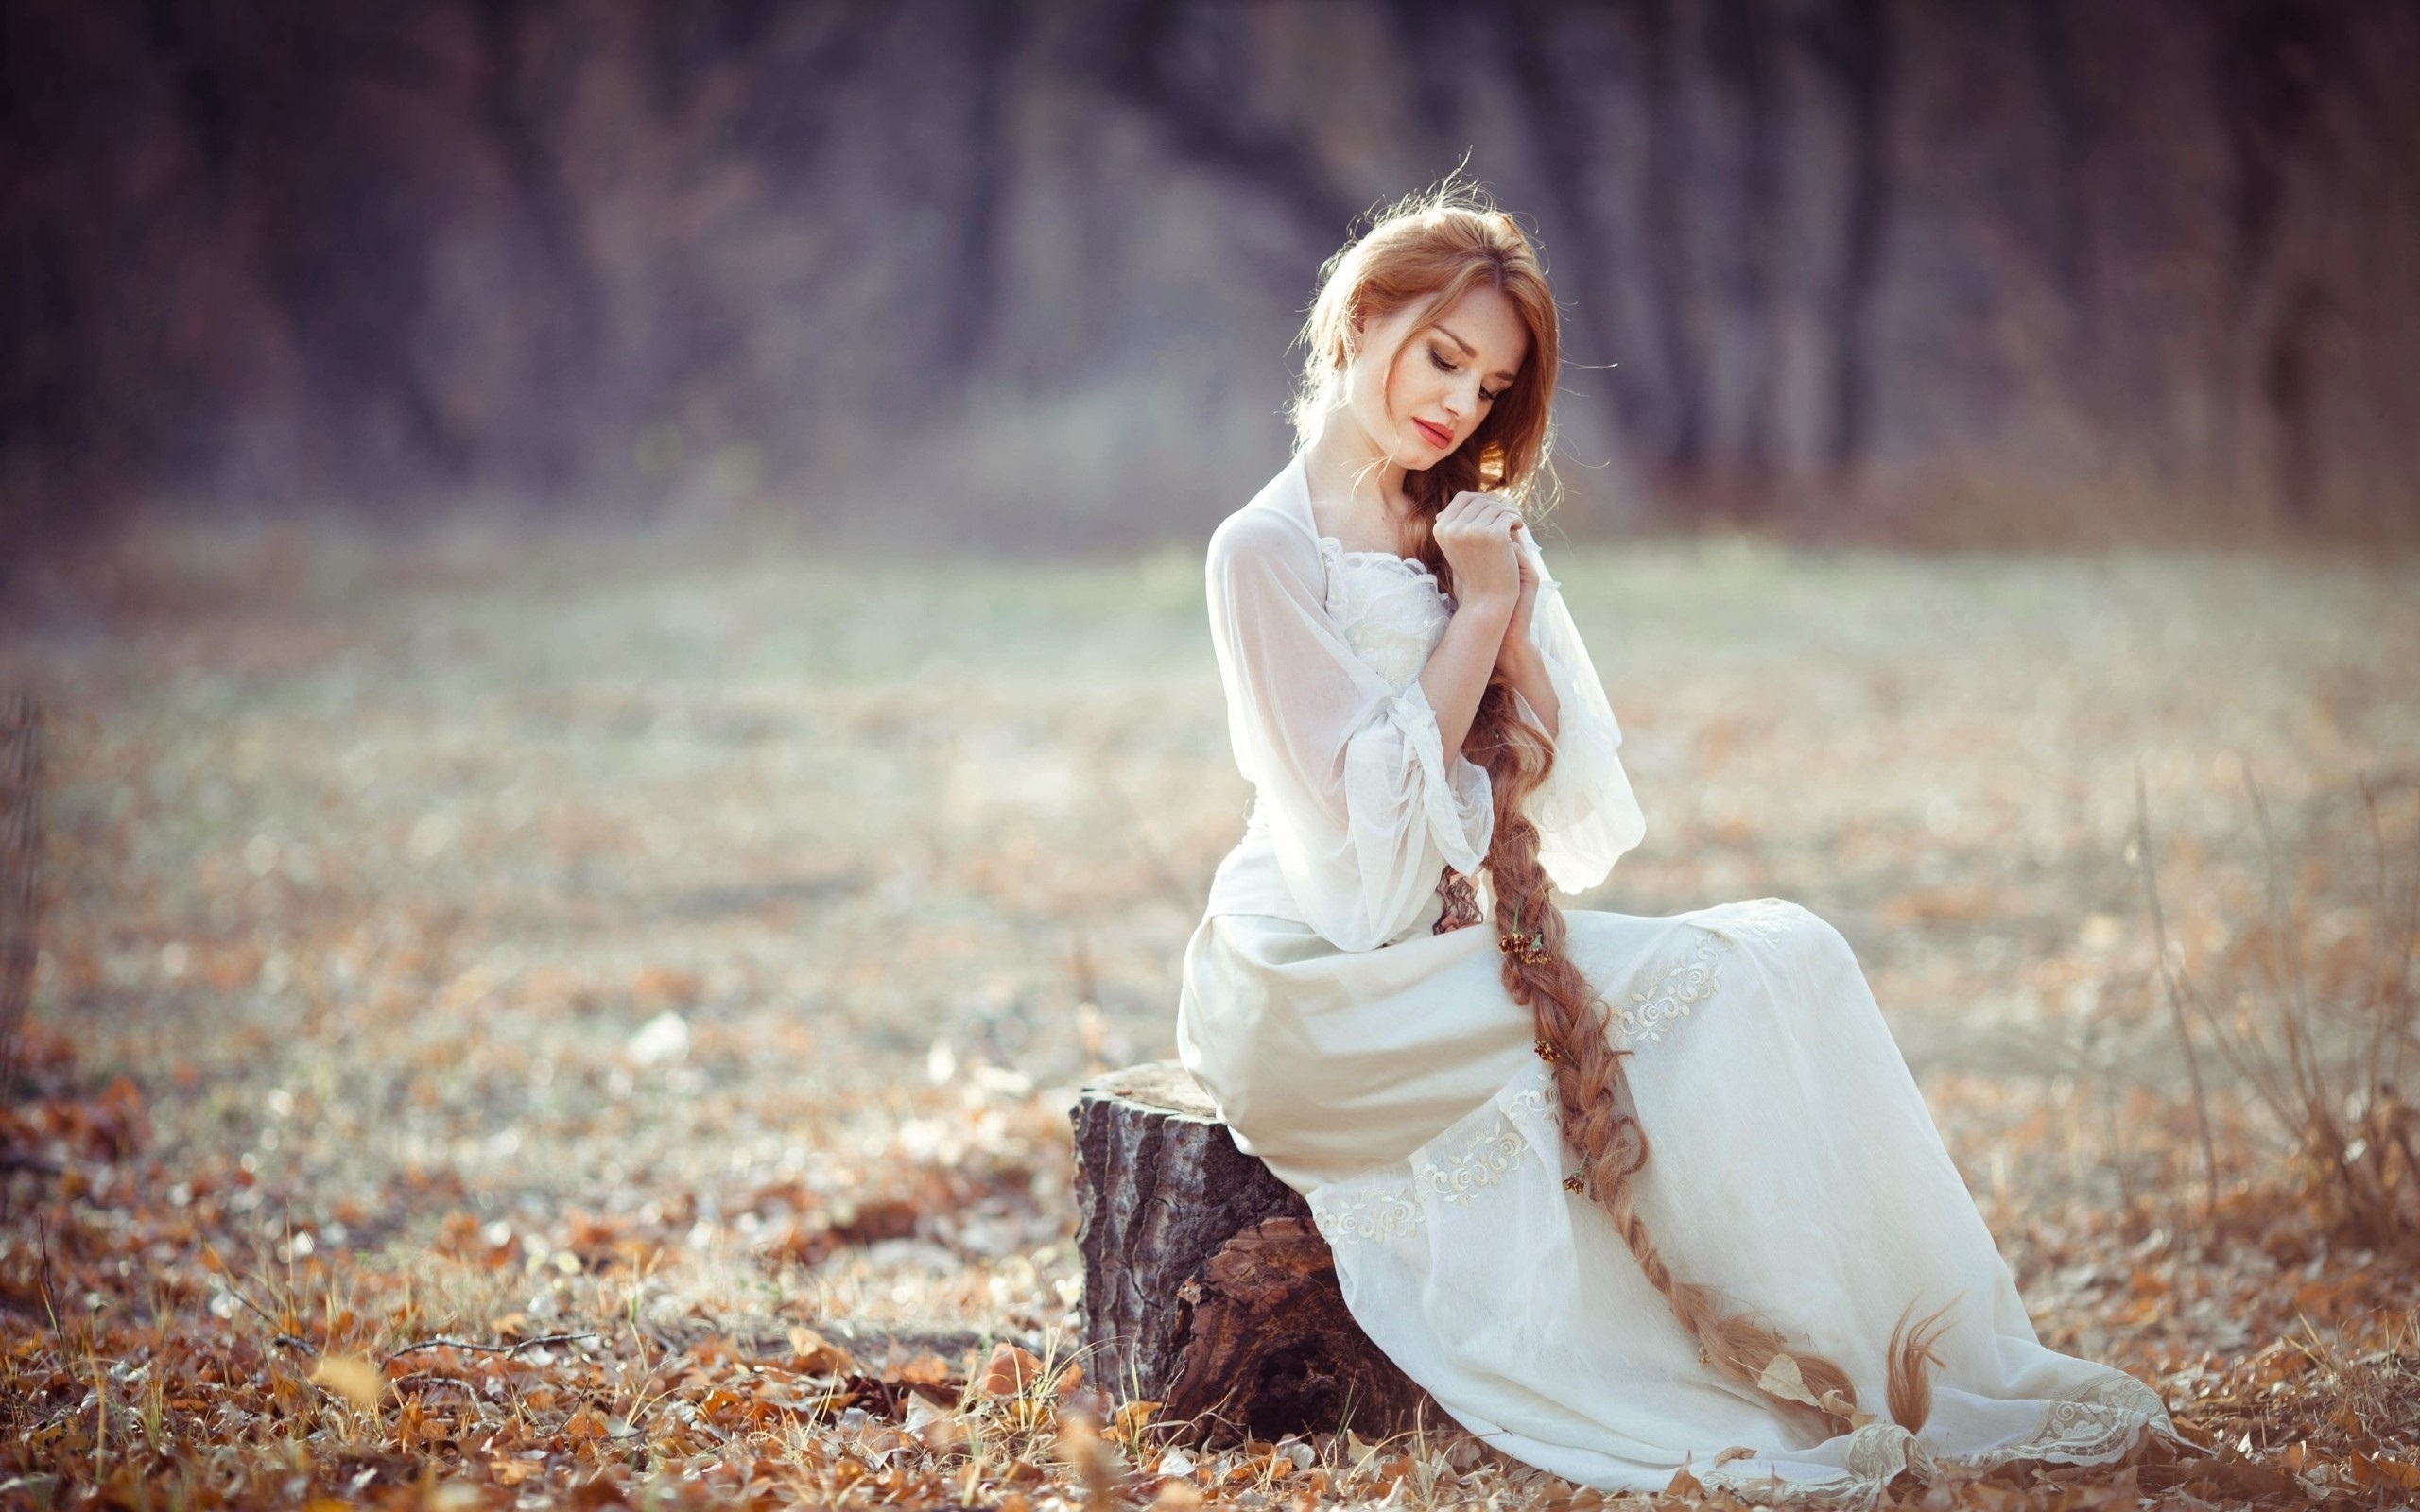 White dress girl sitting on stump long blonde hair